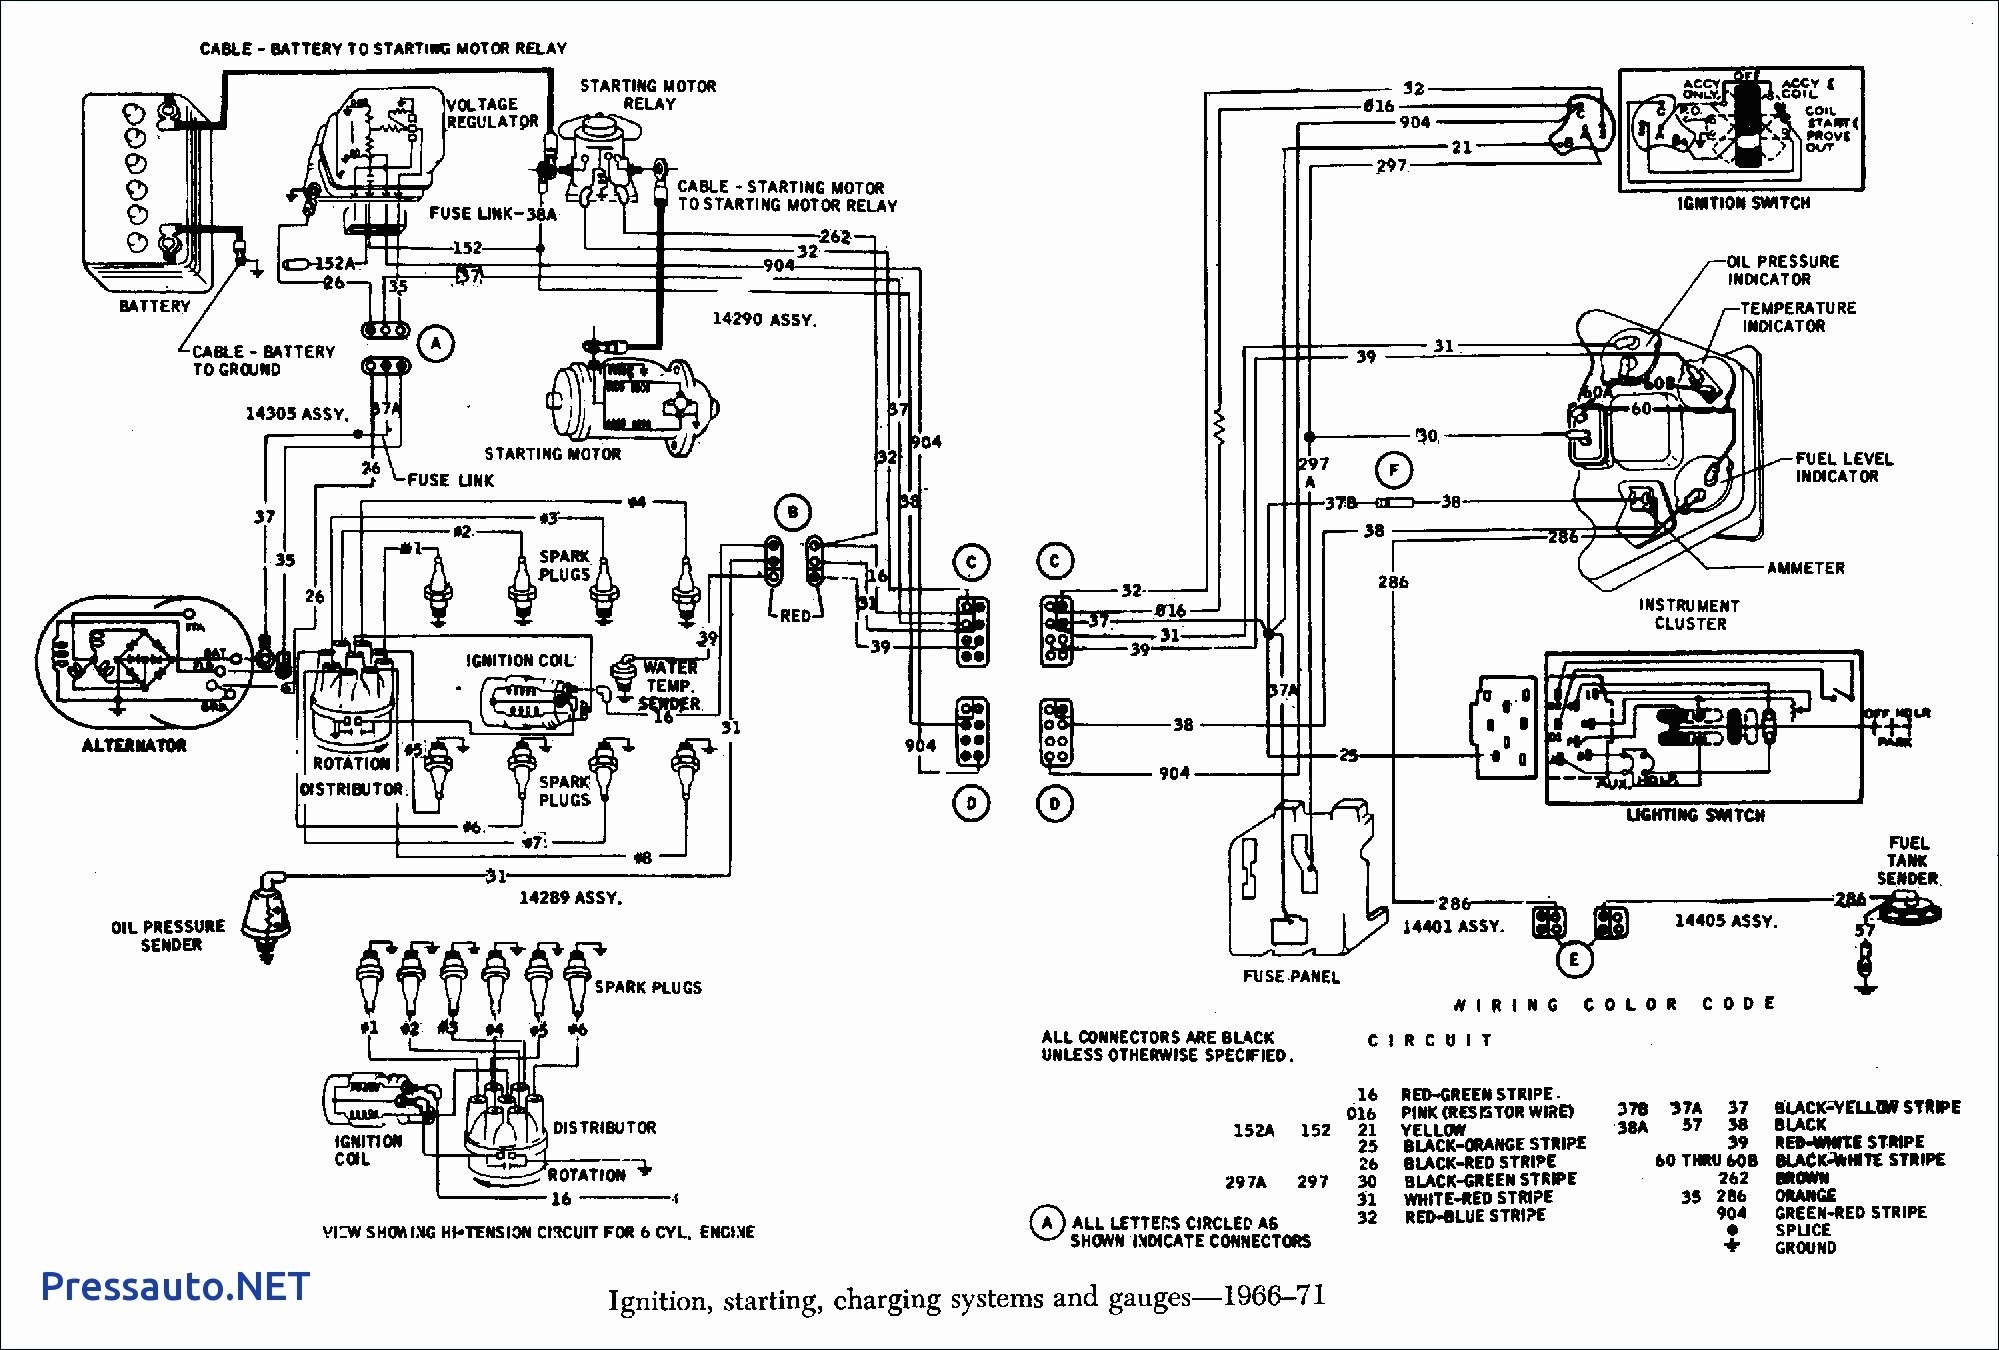 Wiring Diagram for Murray Ignition Switch Inspirationa Murray Lawn Mower Ignition Switch Wiring Diagram Elegant Luxury